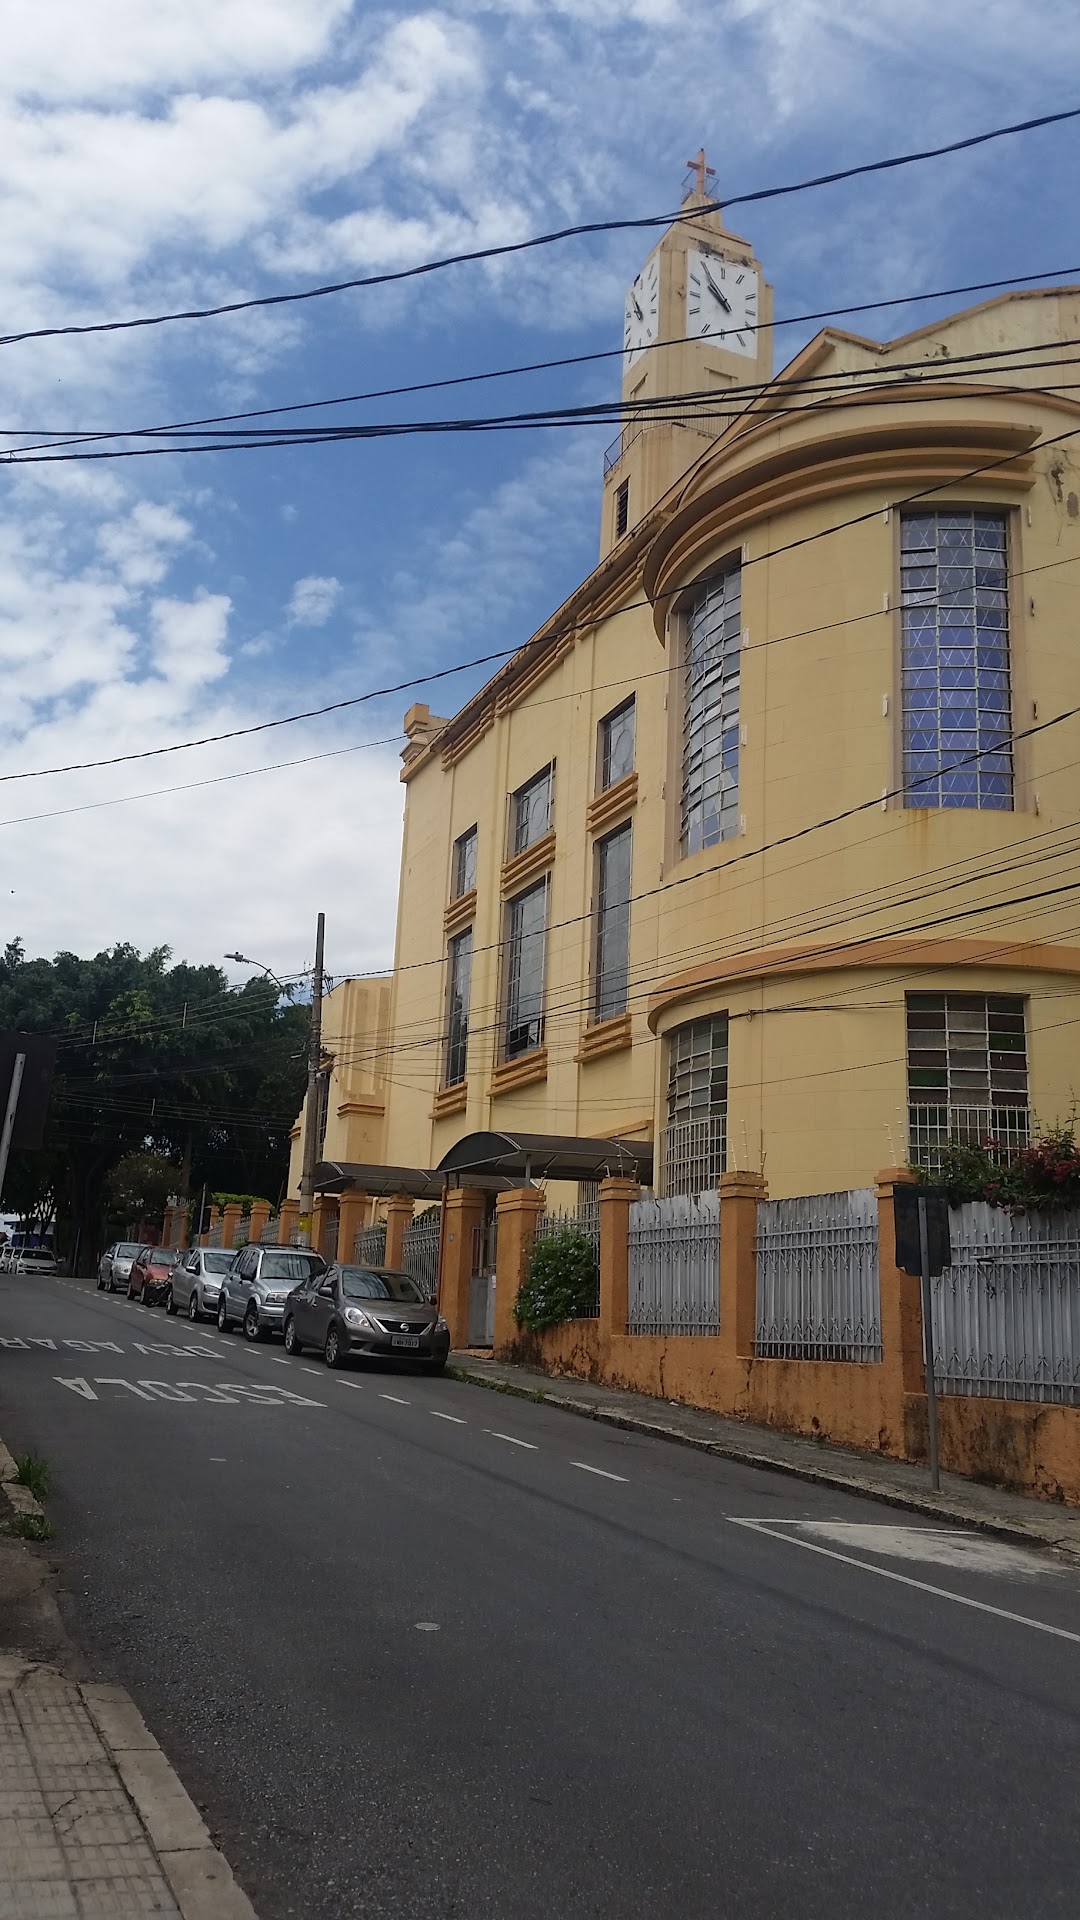 Arquidiocese de Belo Horizonte